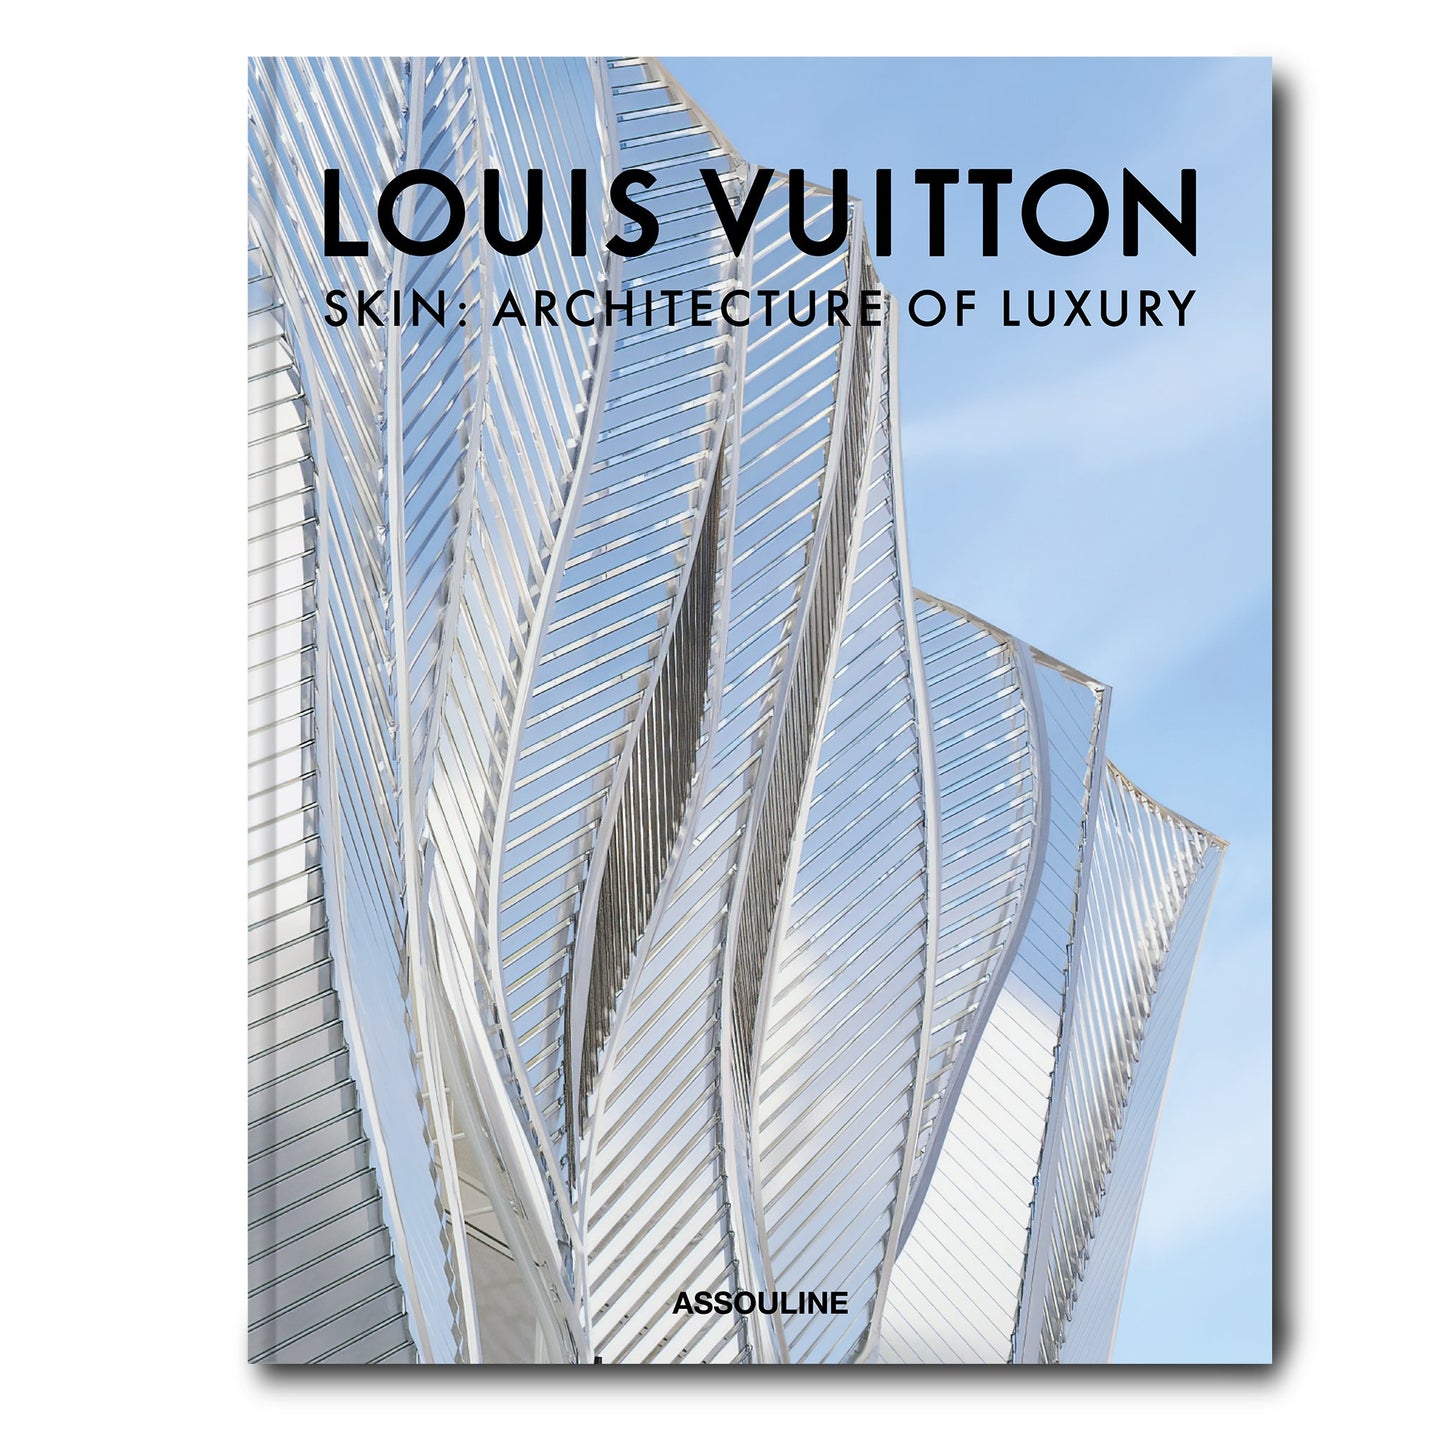 Louis Vuitton Skin: Architecture of Luxury Tokyo